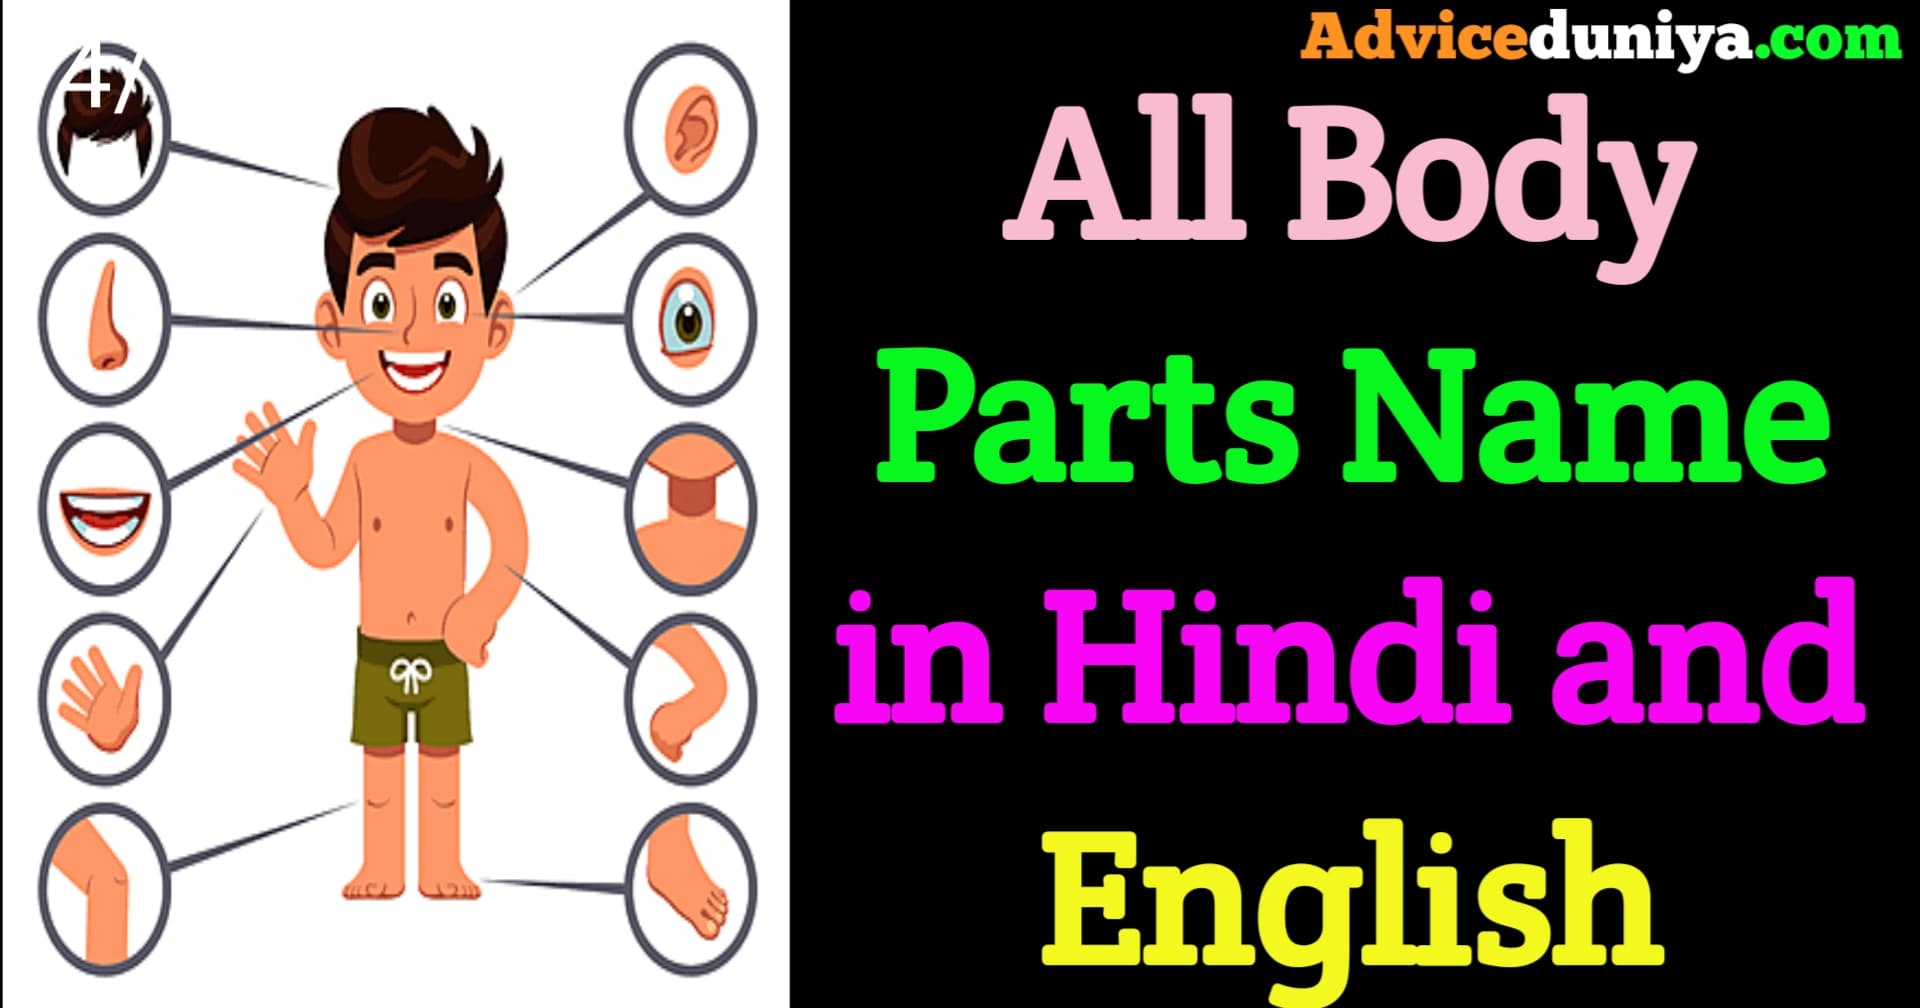 Body Parts name in hindi